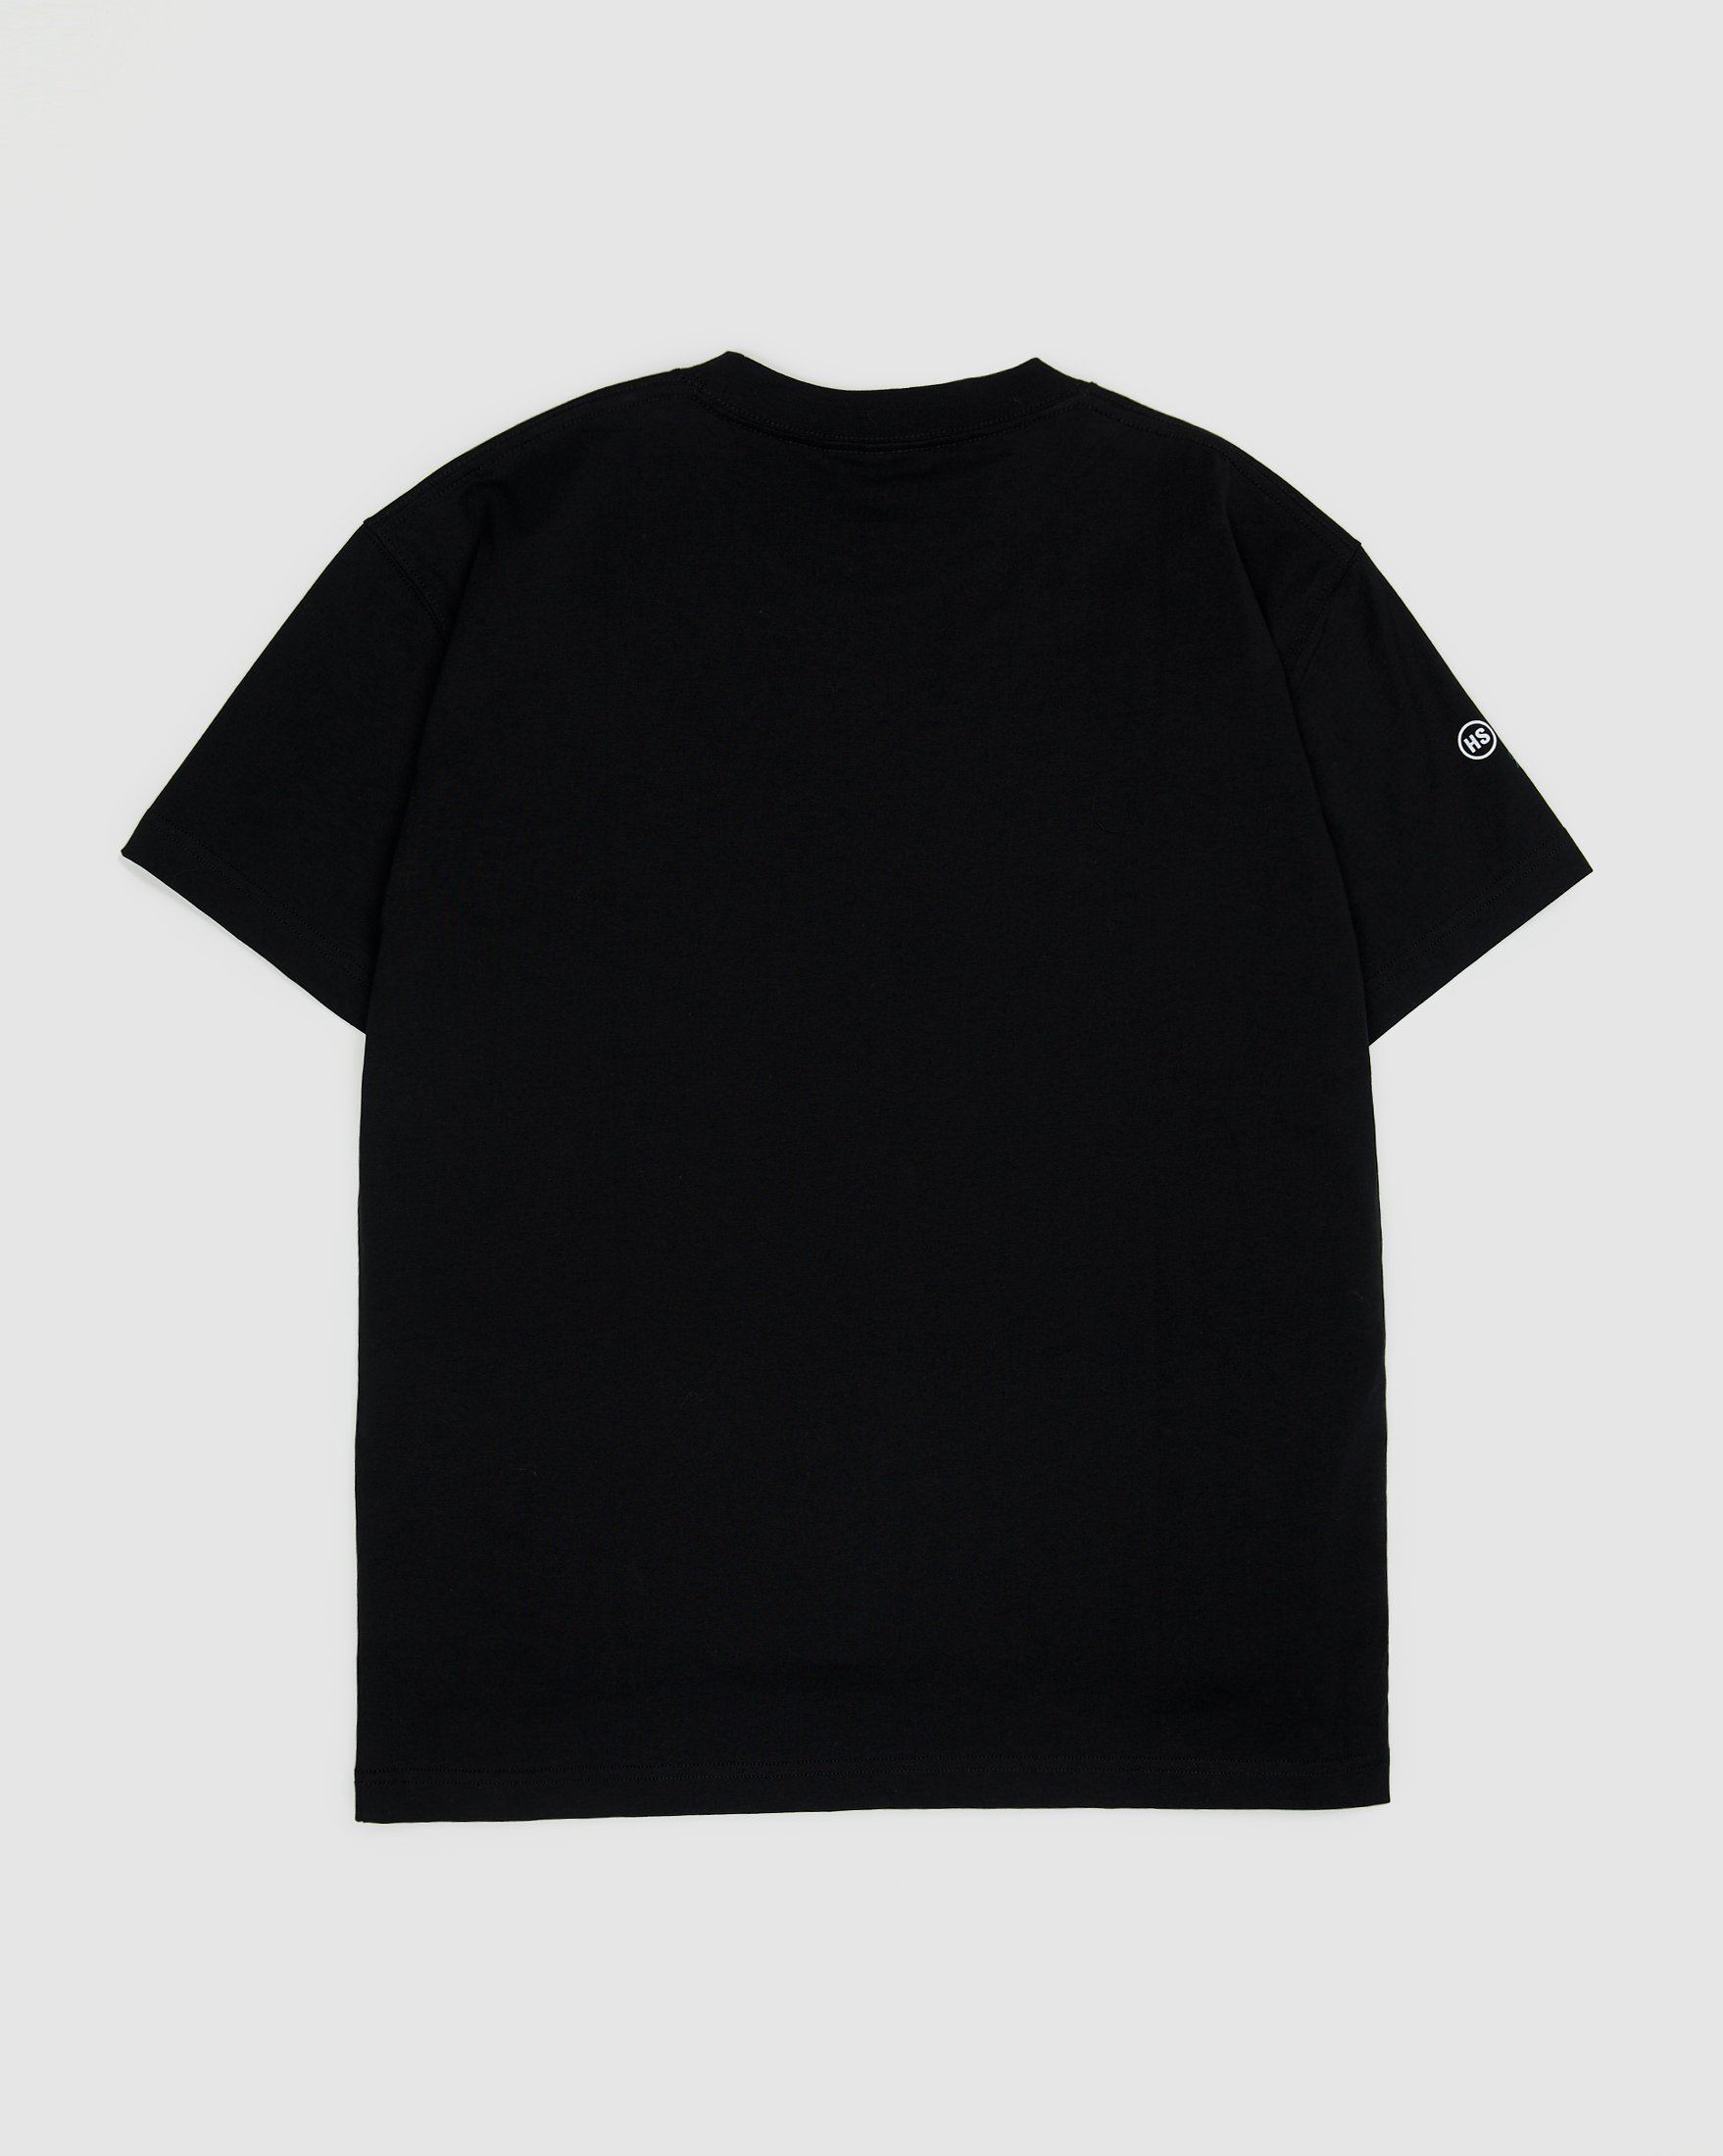 Colette Mon Amour x Soulland - Snoopy Bed Black T-Shirt - Clothing - Black - Image 2